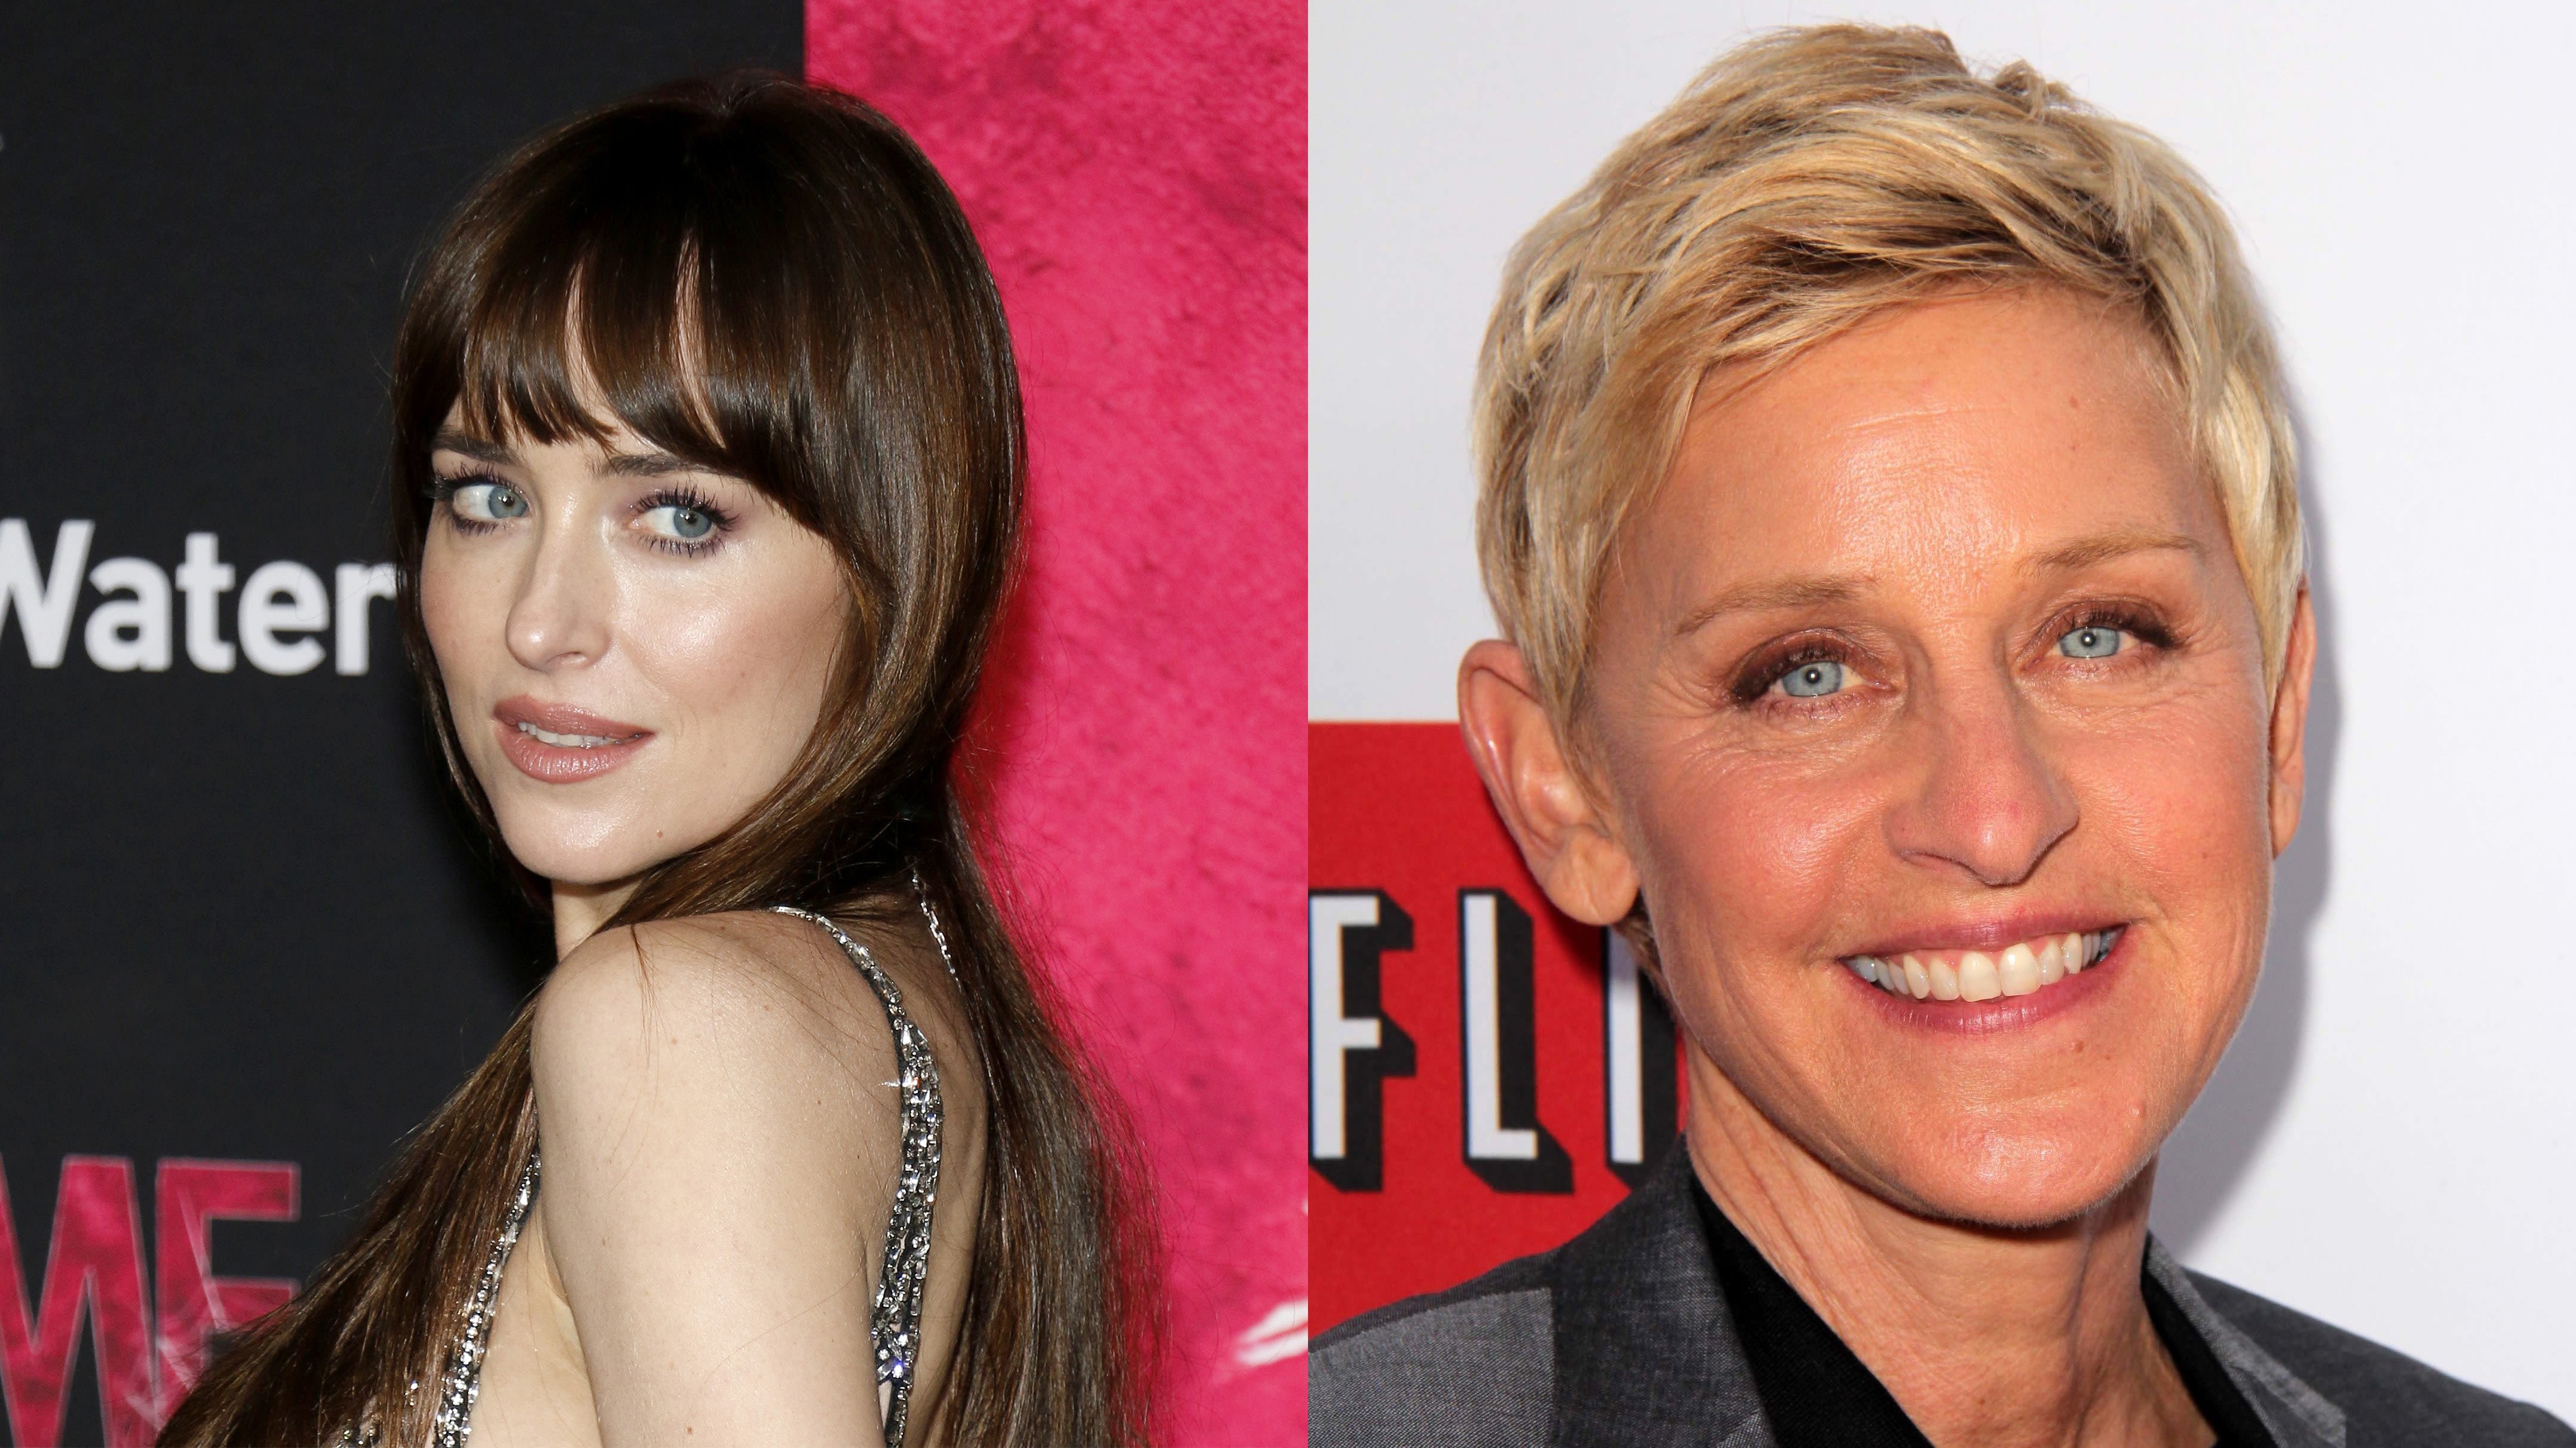 Dakota Johnson lands queer role because of her infamous viral moment with Ellen DeGeneres